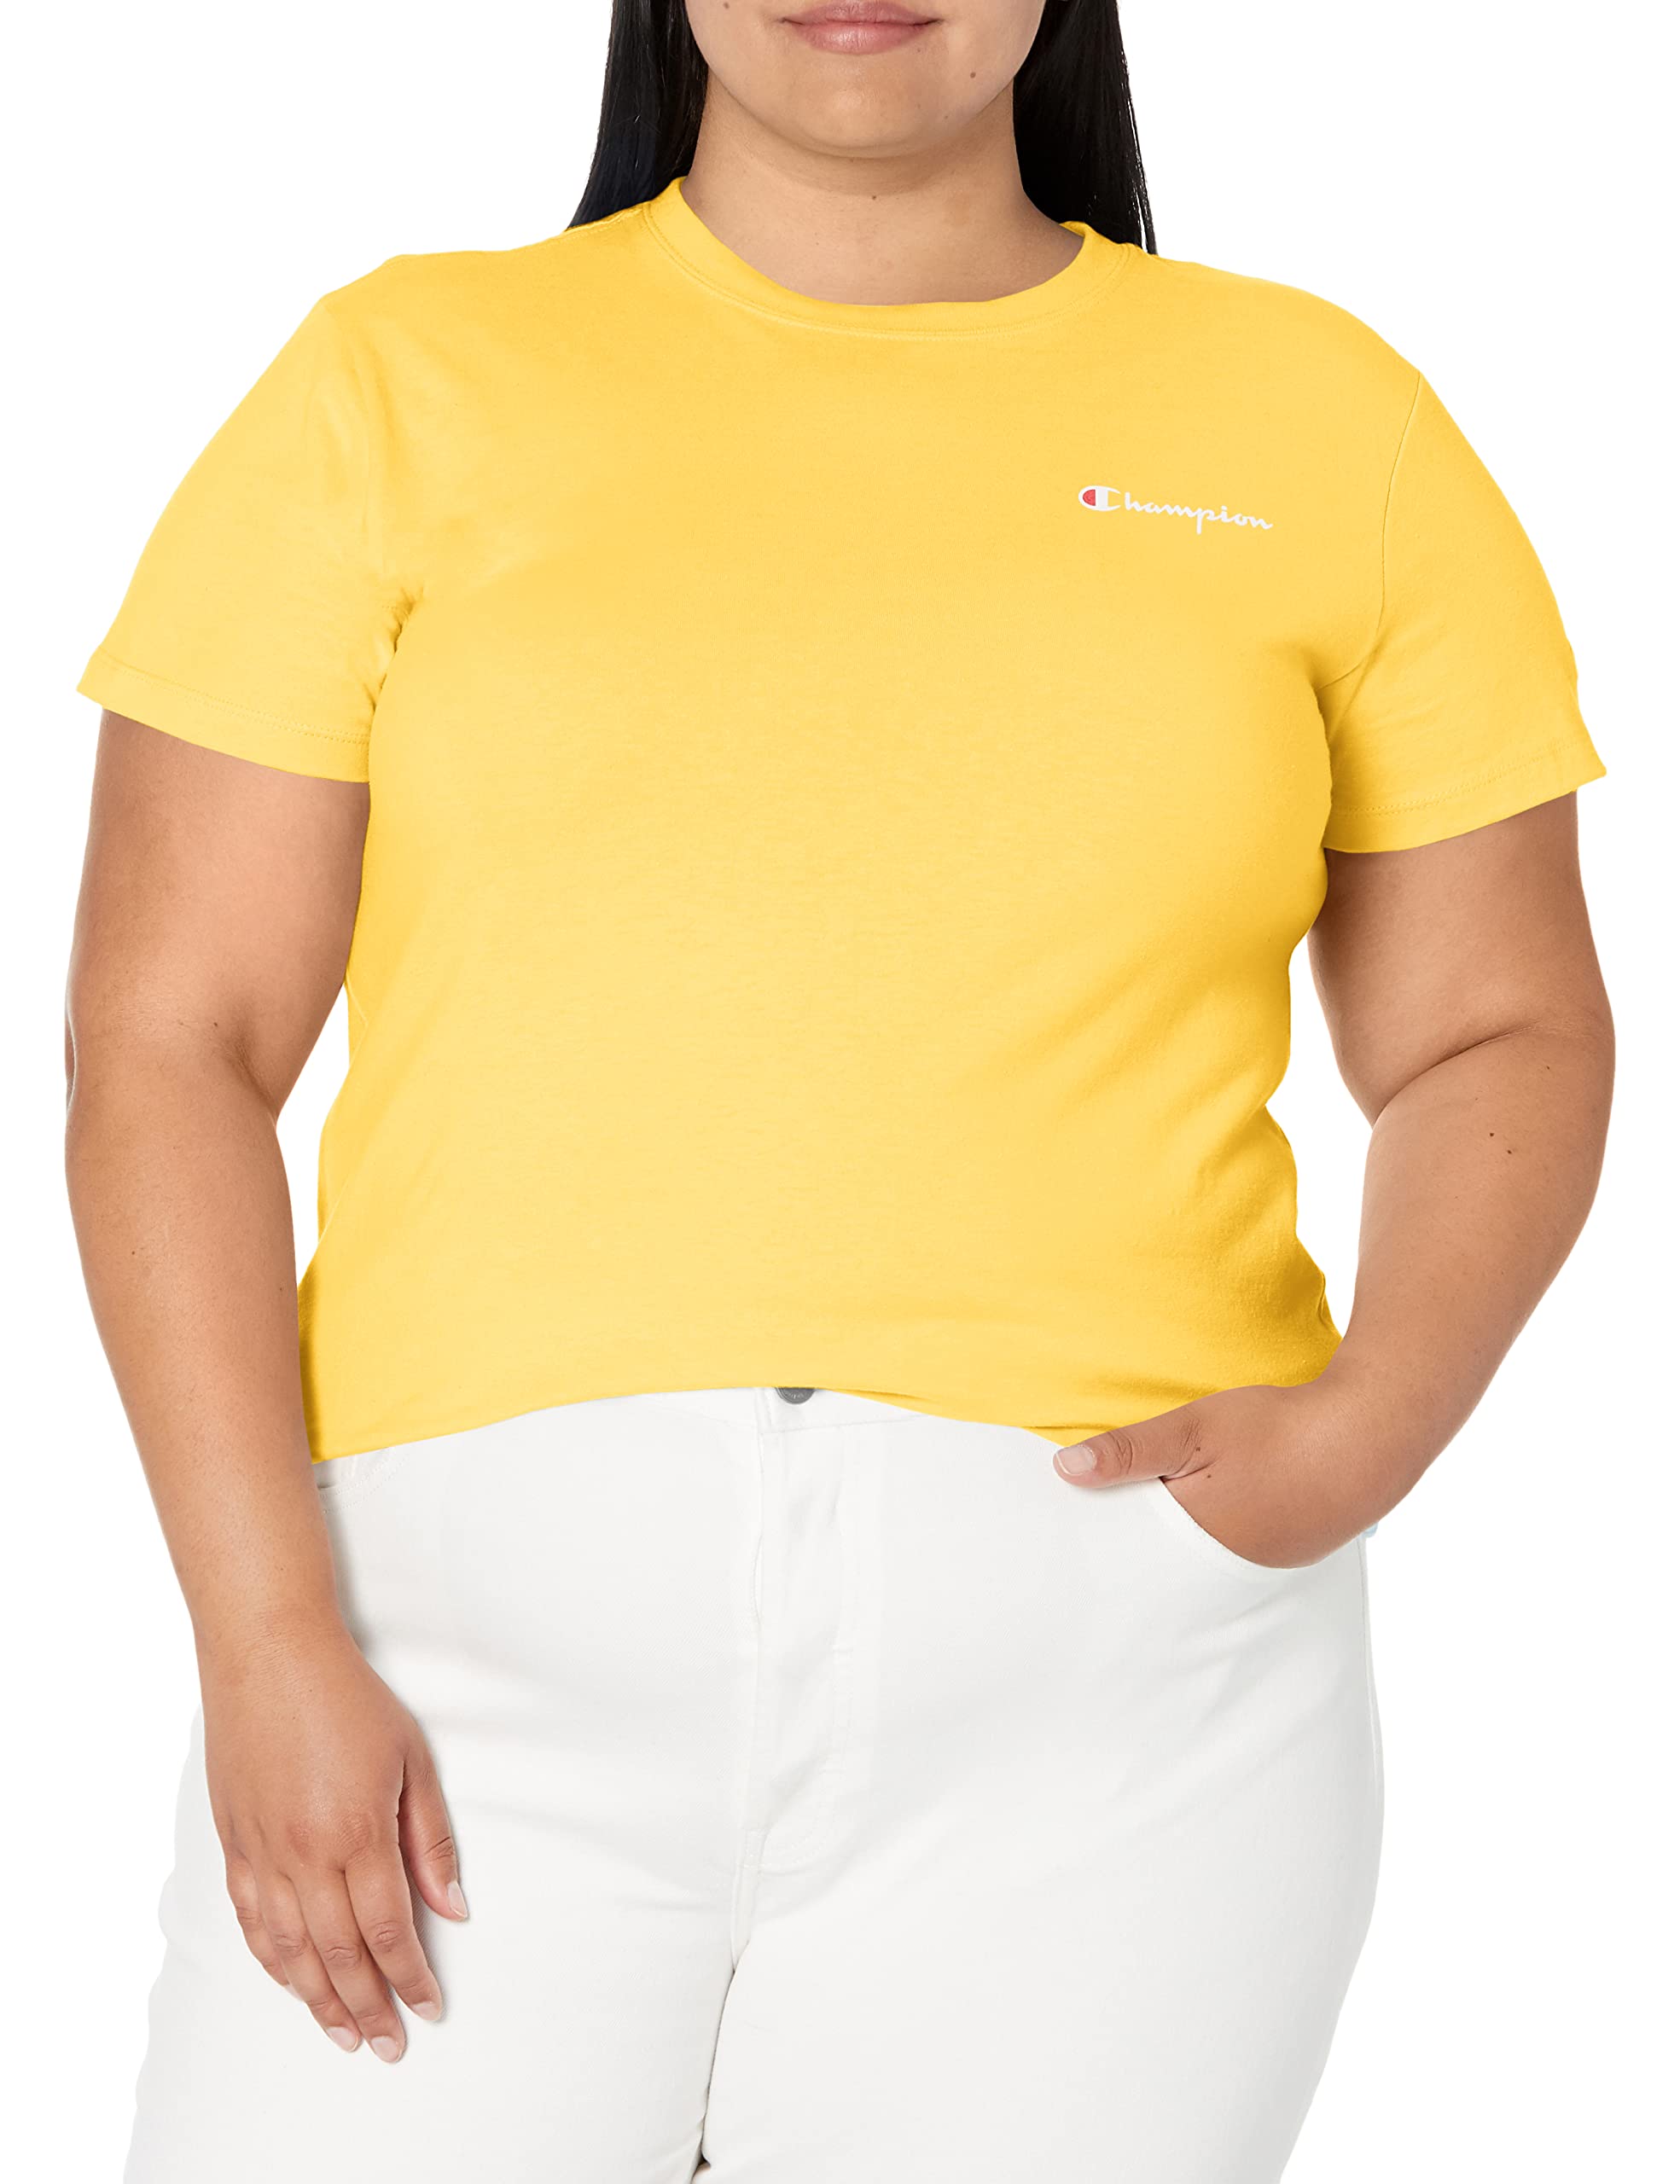 Champion Women's T-shirt, Classic Tee, Comfortable T-shirt for Women, Script (Plus Size Available)